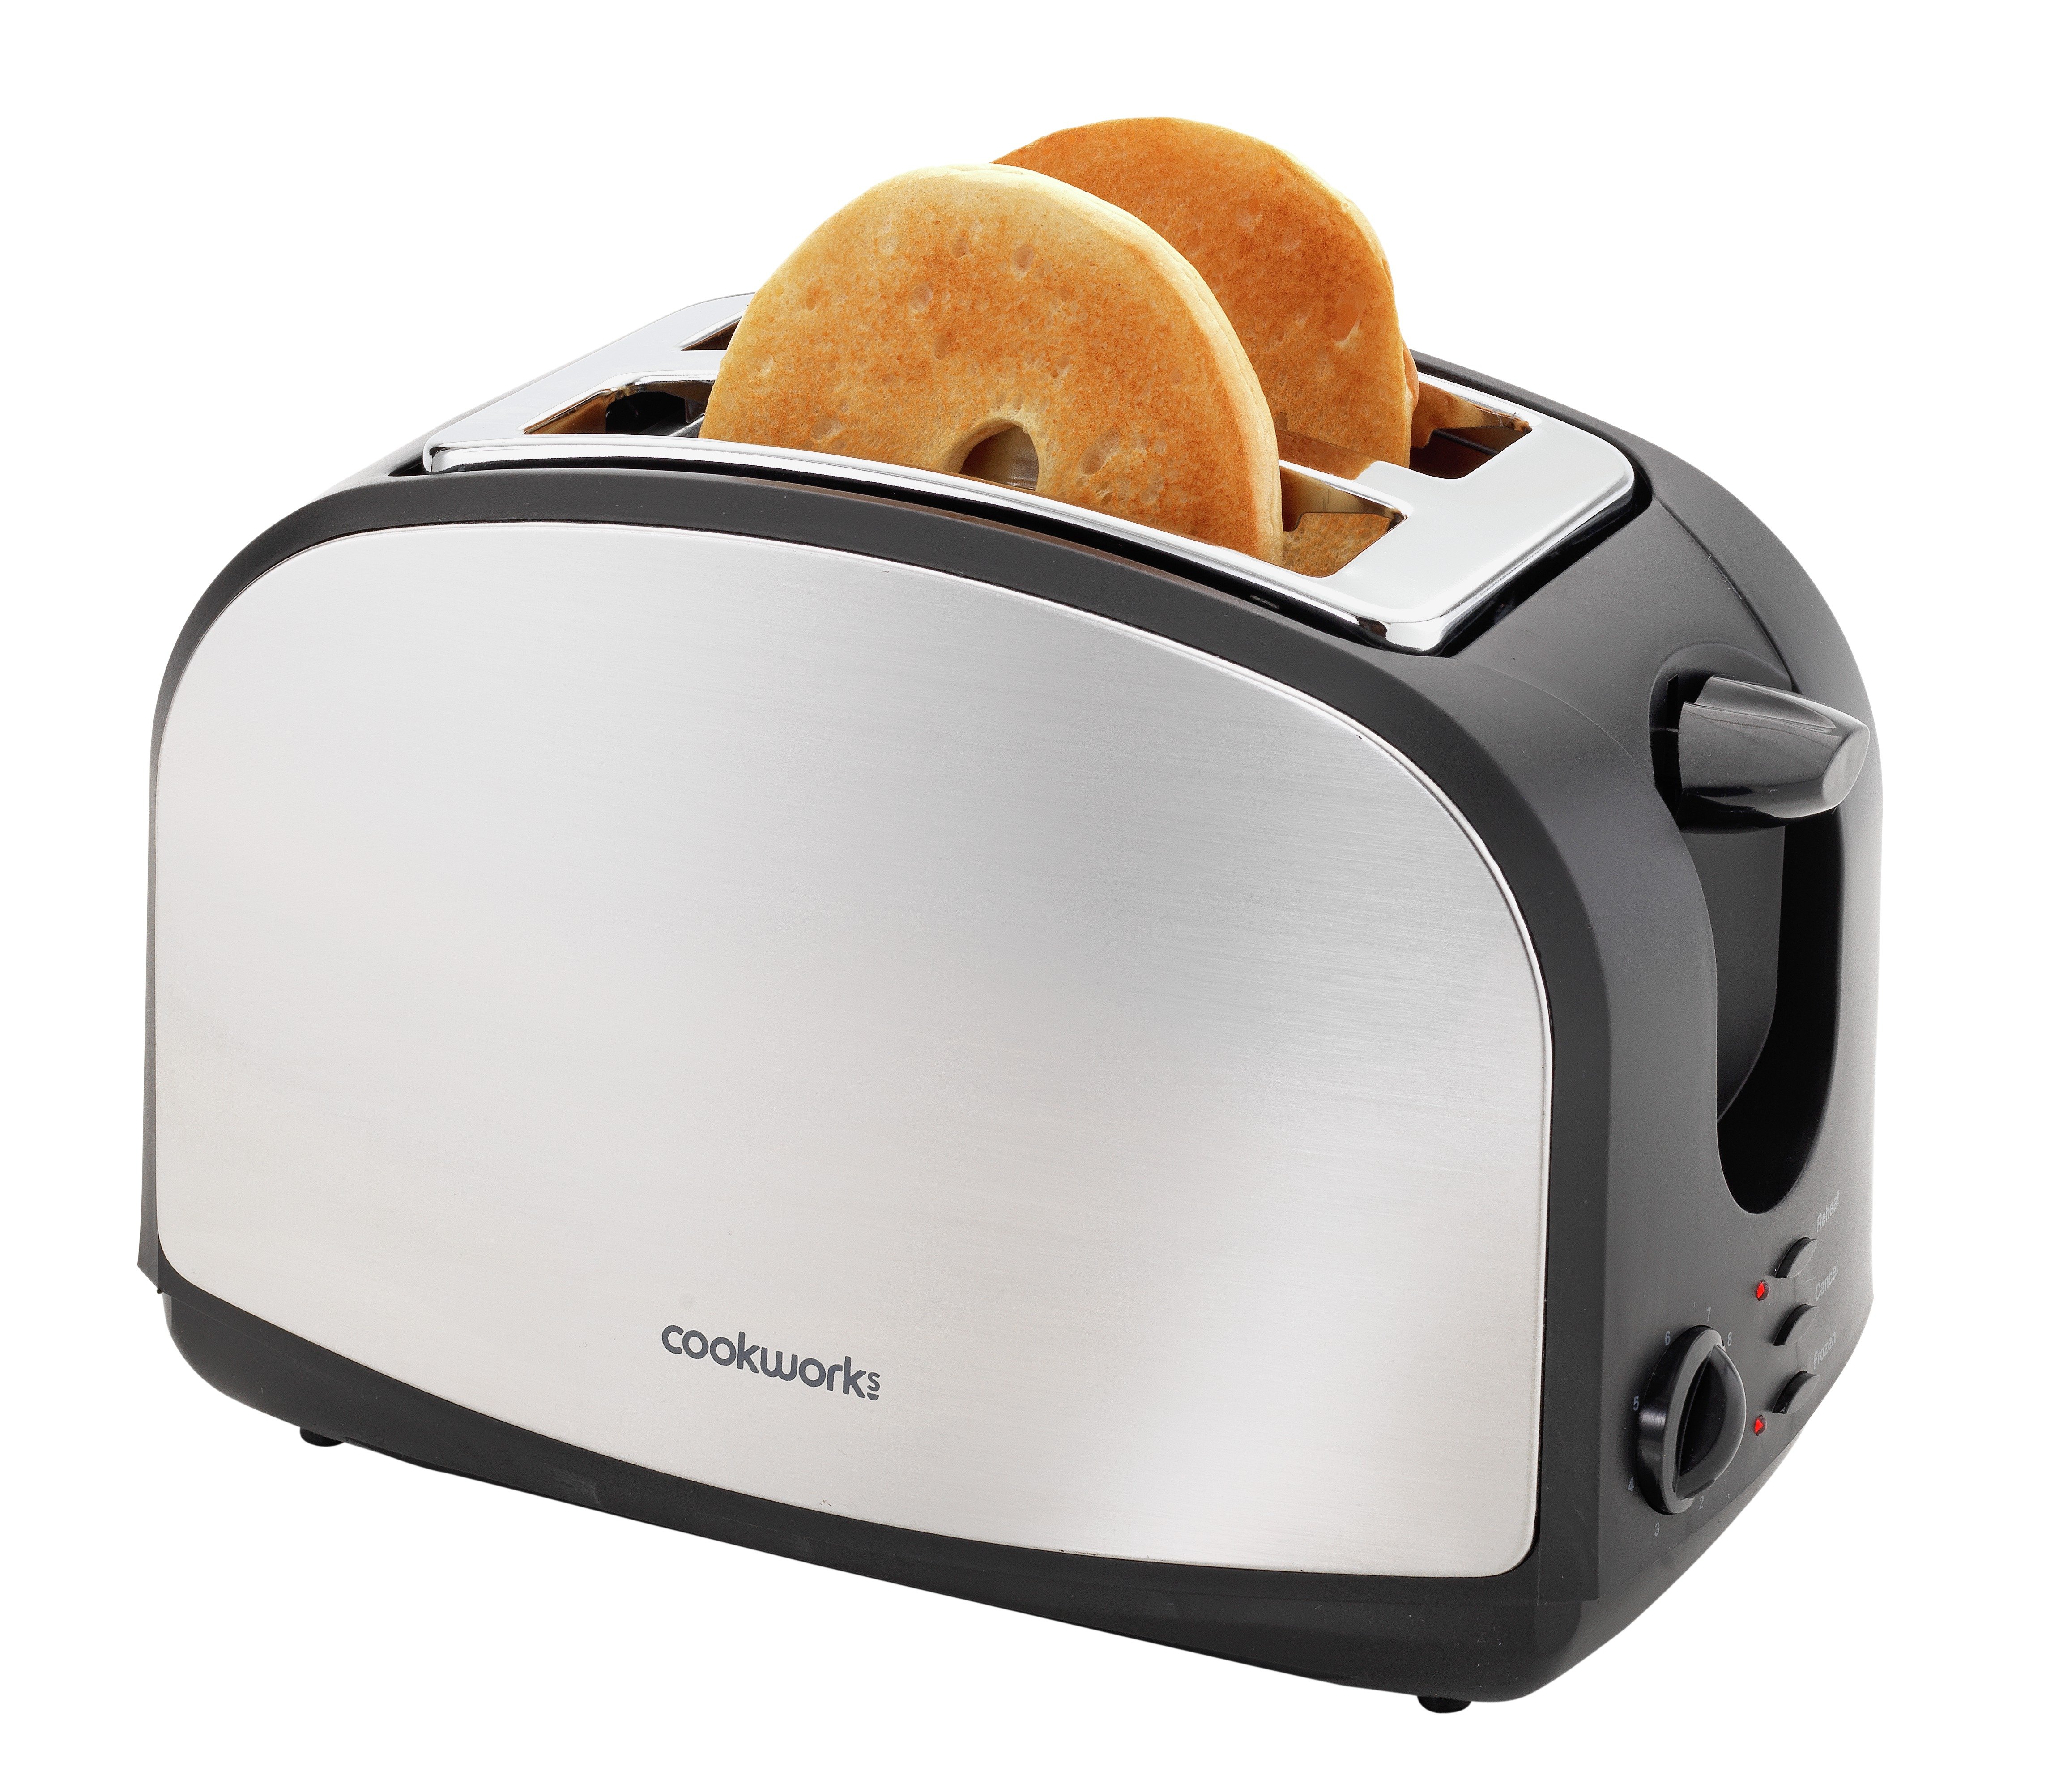 'Cookworks 2 Slice Toaster - Stainless Steel